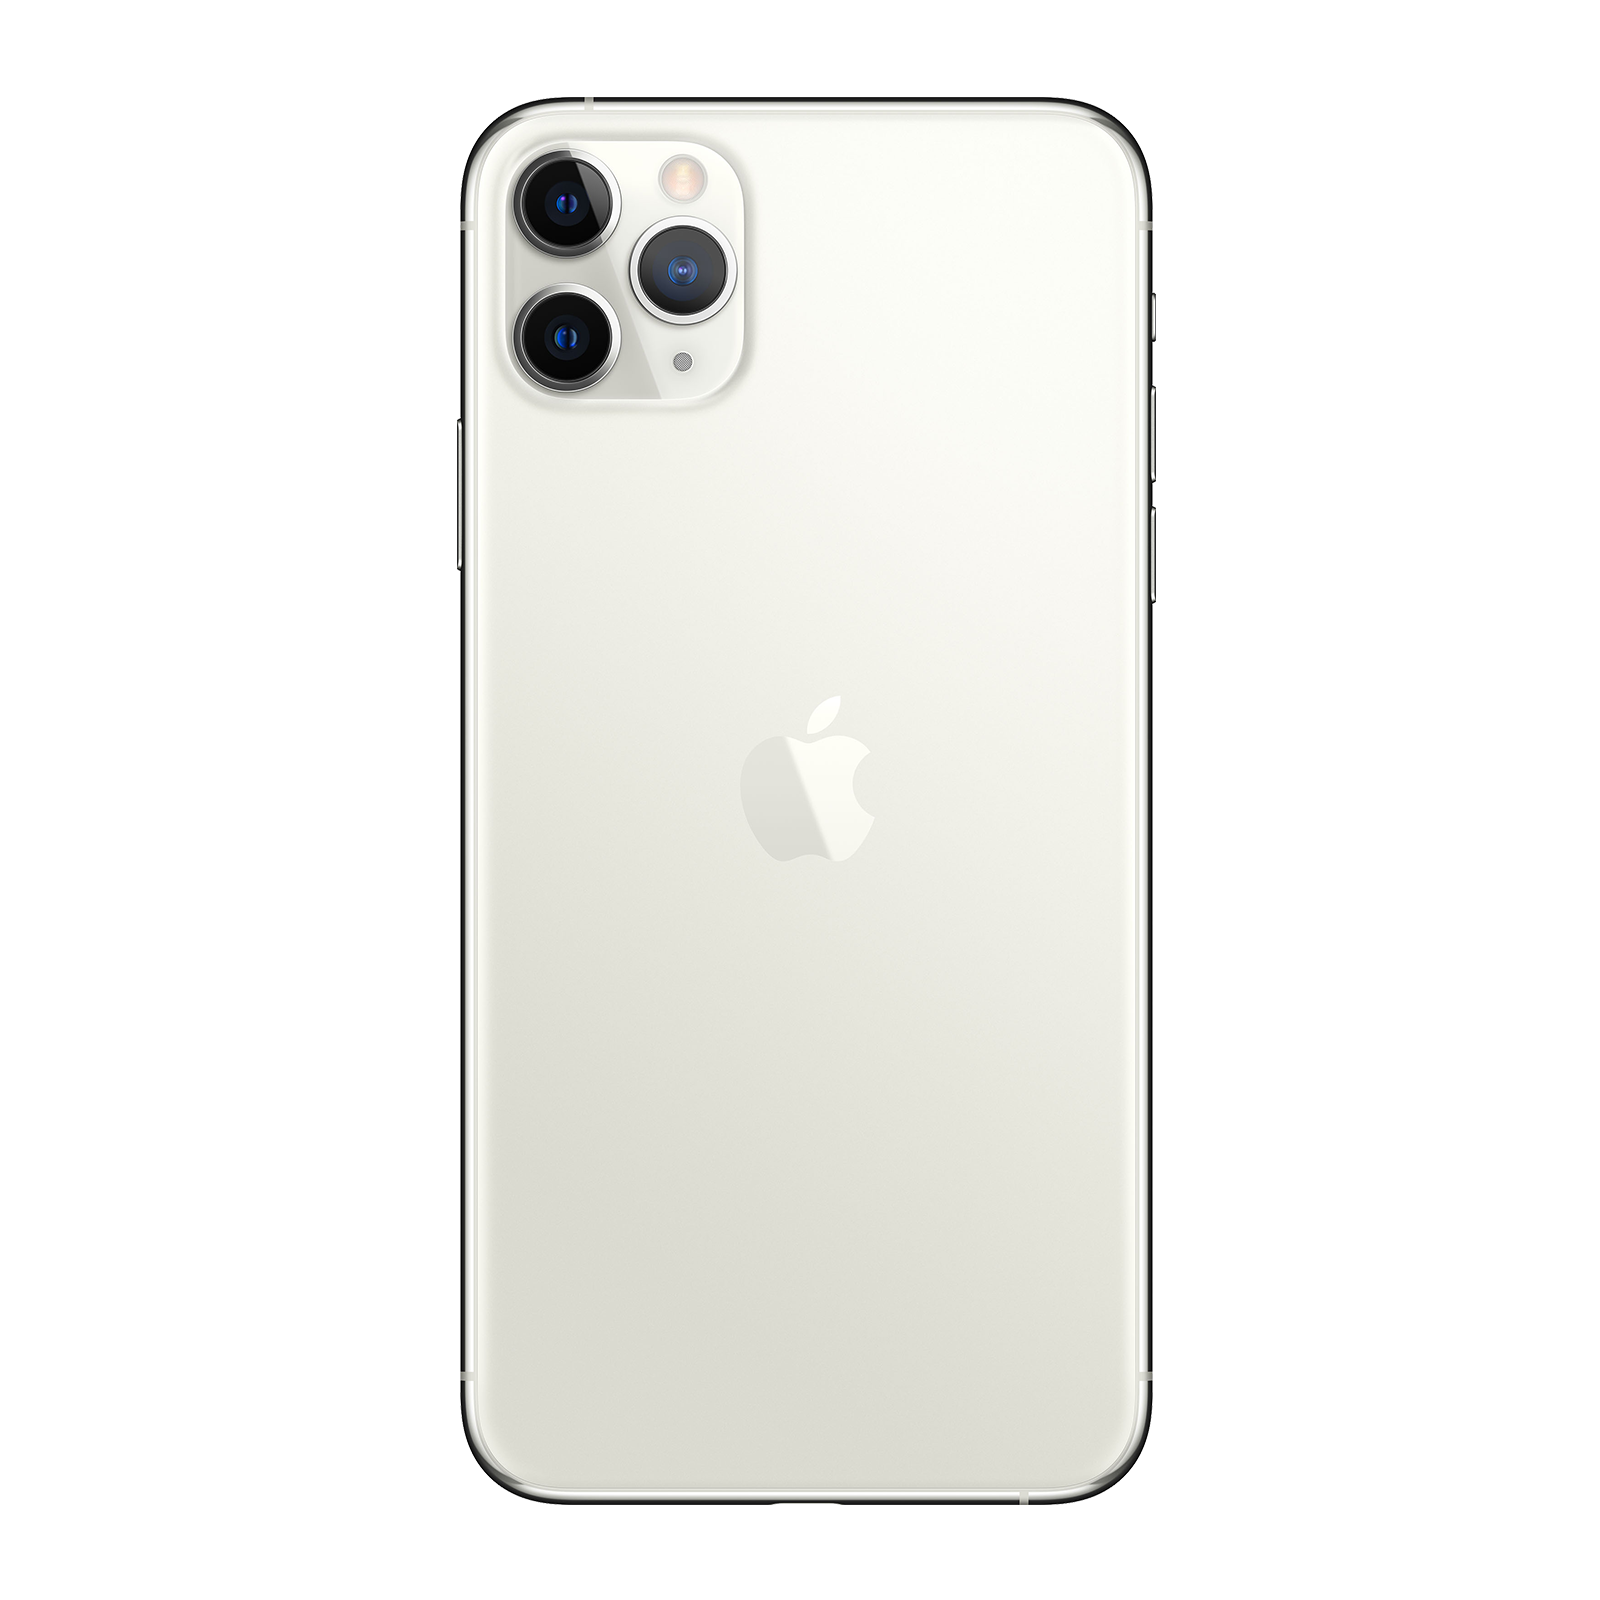 iPhone 11 Pro 256GB Silver Pristine Unlocked - New Battery